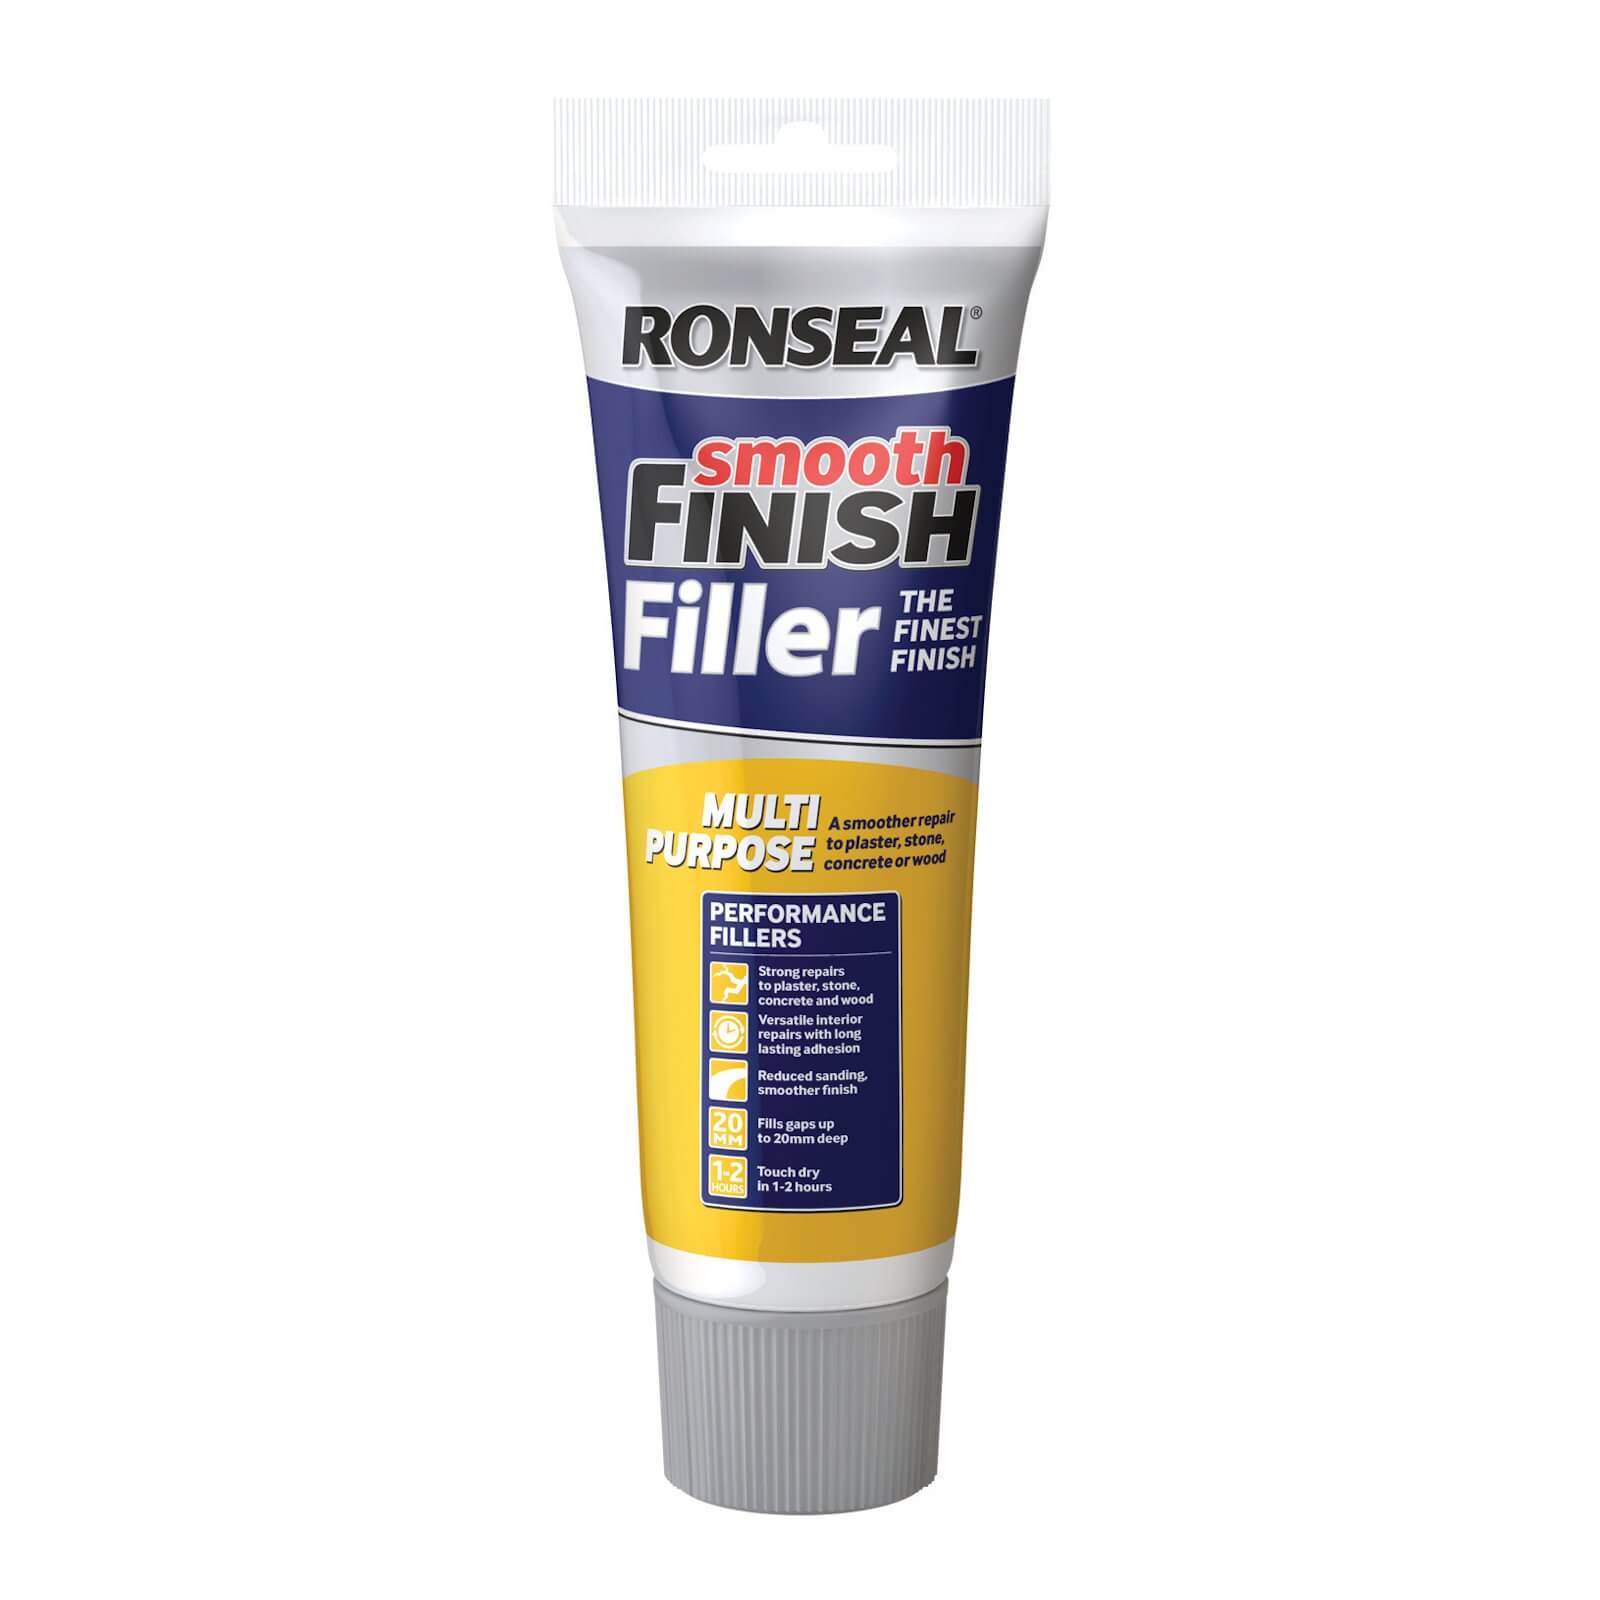 Ronseal Multi Purpose Wall Filler - 330g